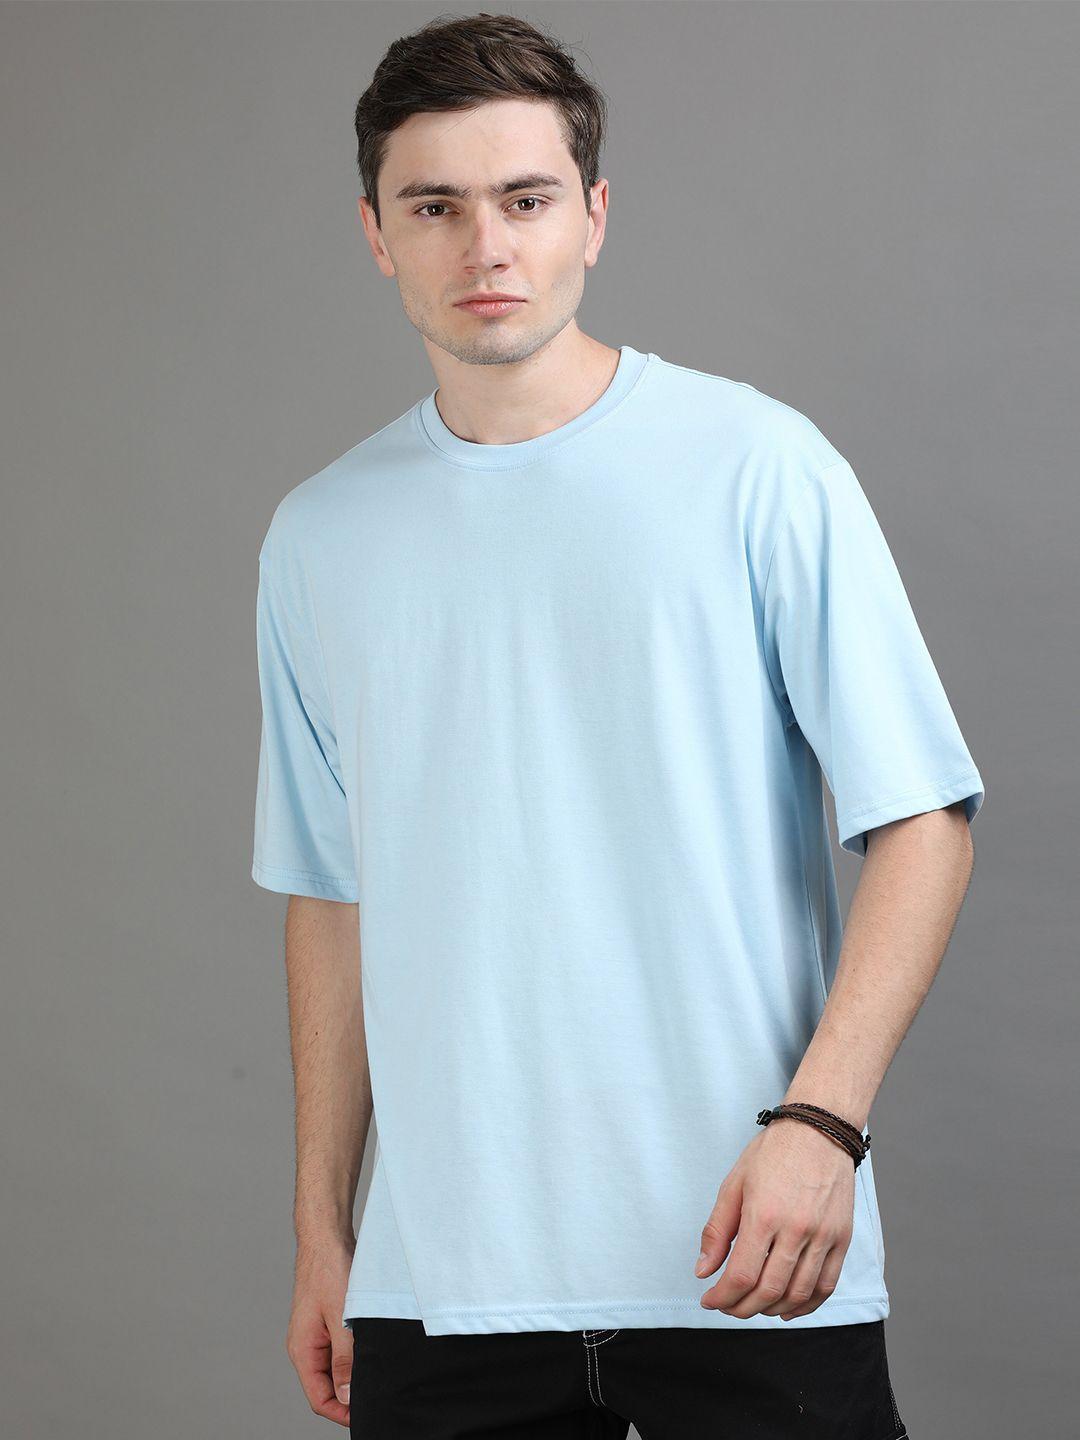 bushirt oversized drop-shoulder sleeves pure cotton casual t-shirt